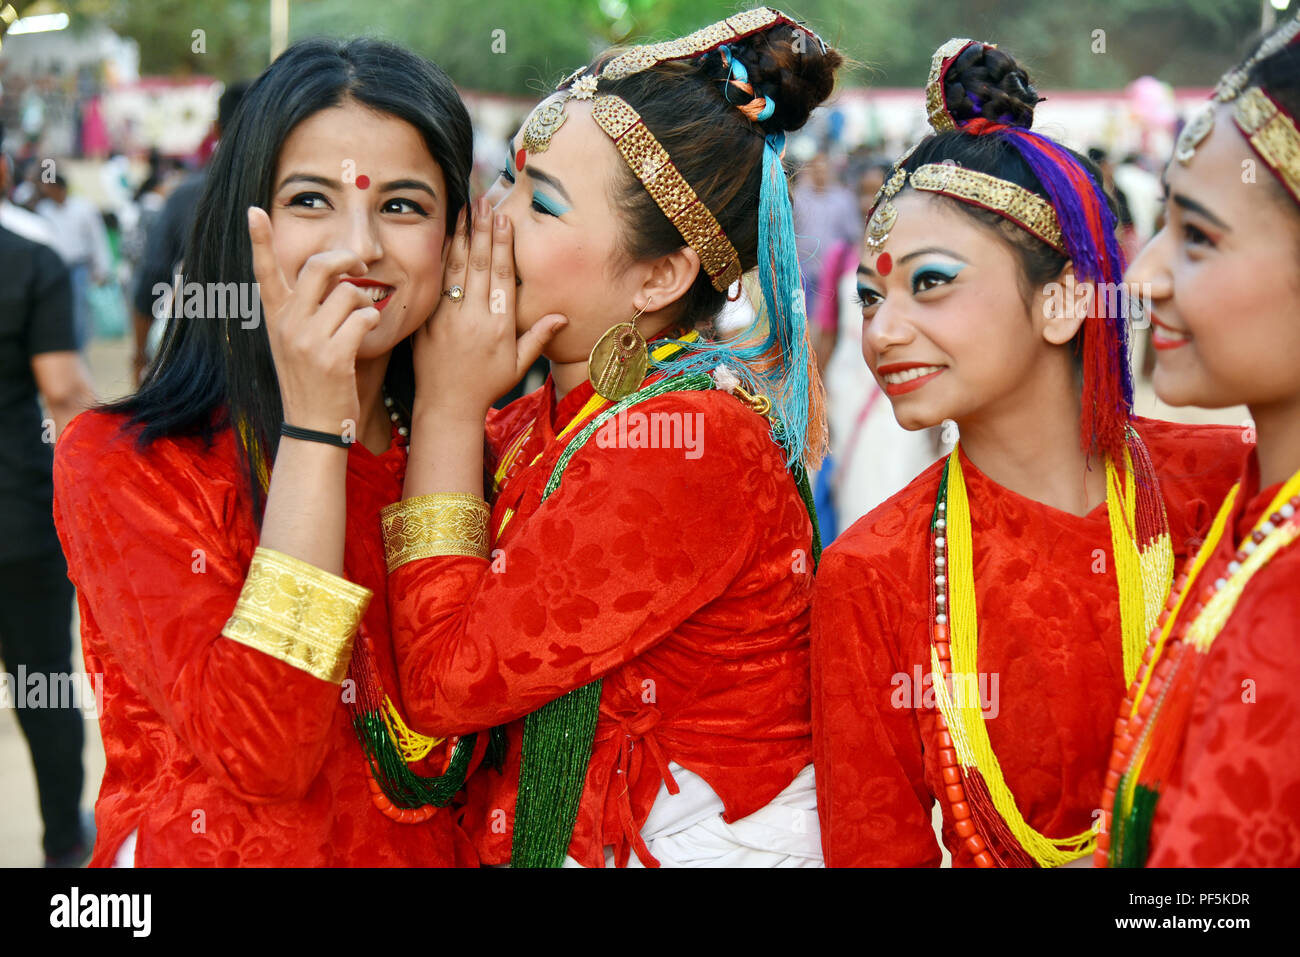 Gandhinagar, India - March 9, 2018: Sikkim girls dressed in traditional attire having fun during Sanskruti Kunj Vasantotsav fair in Gandhinagar. Stock Photo